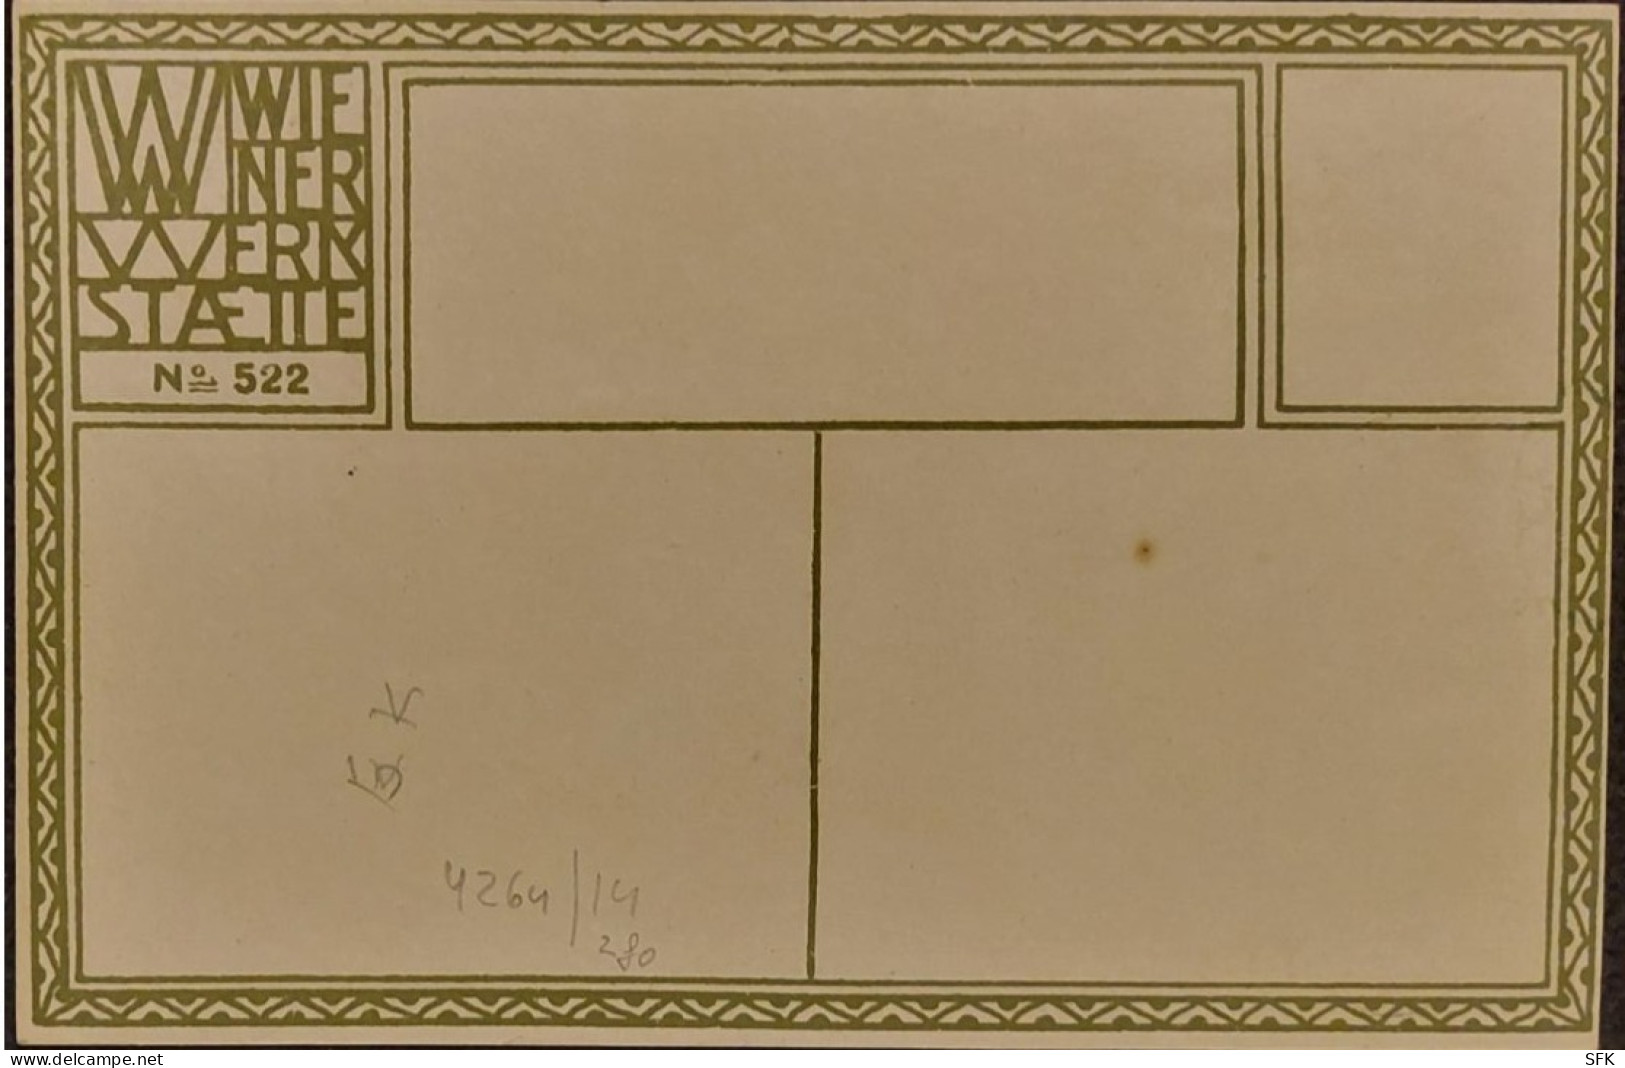 WW 522  Mela  Kohler Original With Guarantee, Artist Signature I- FV, 811 - Koehler, Mela